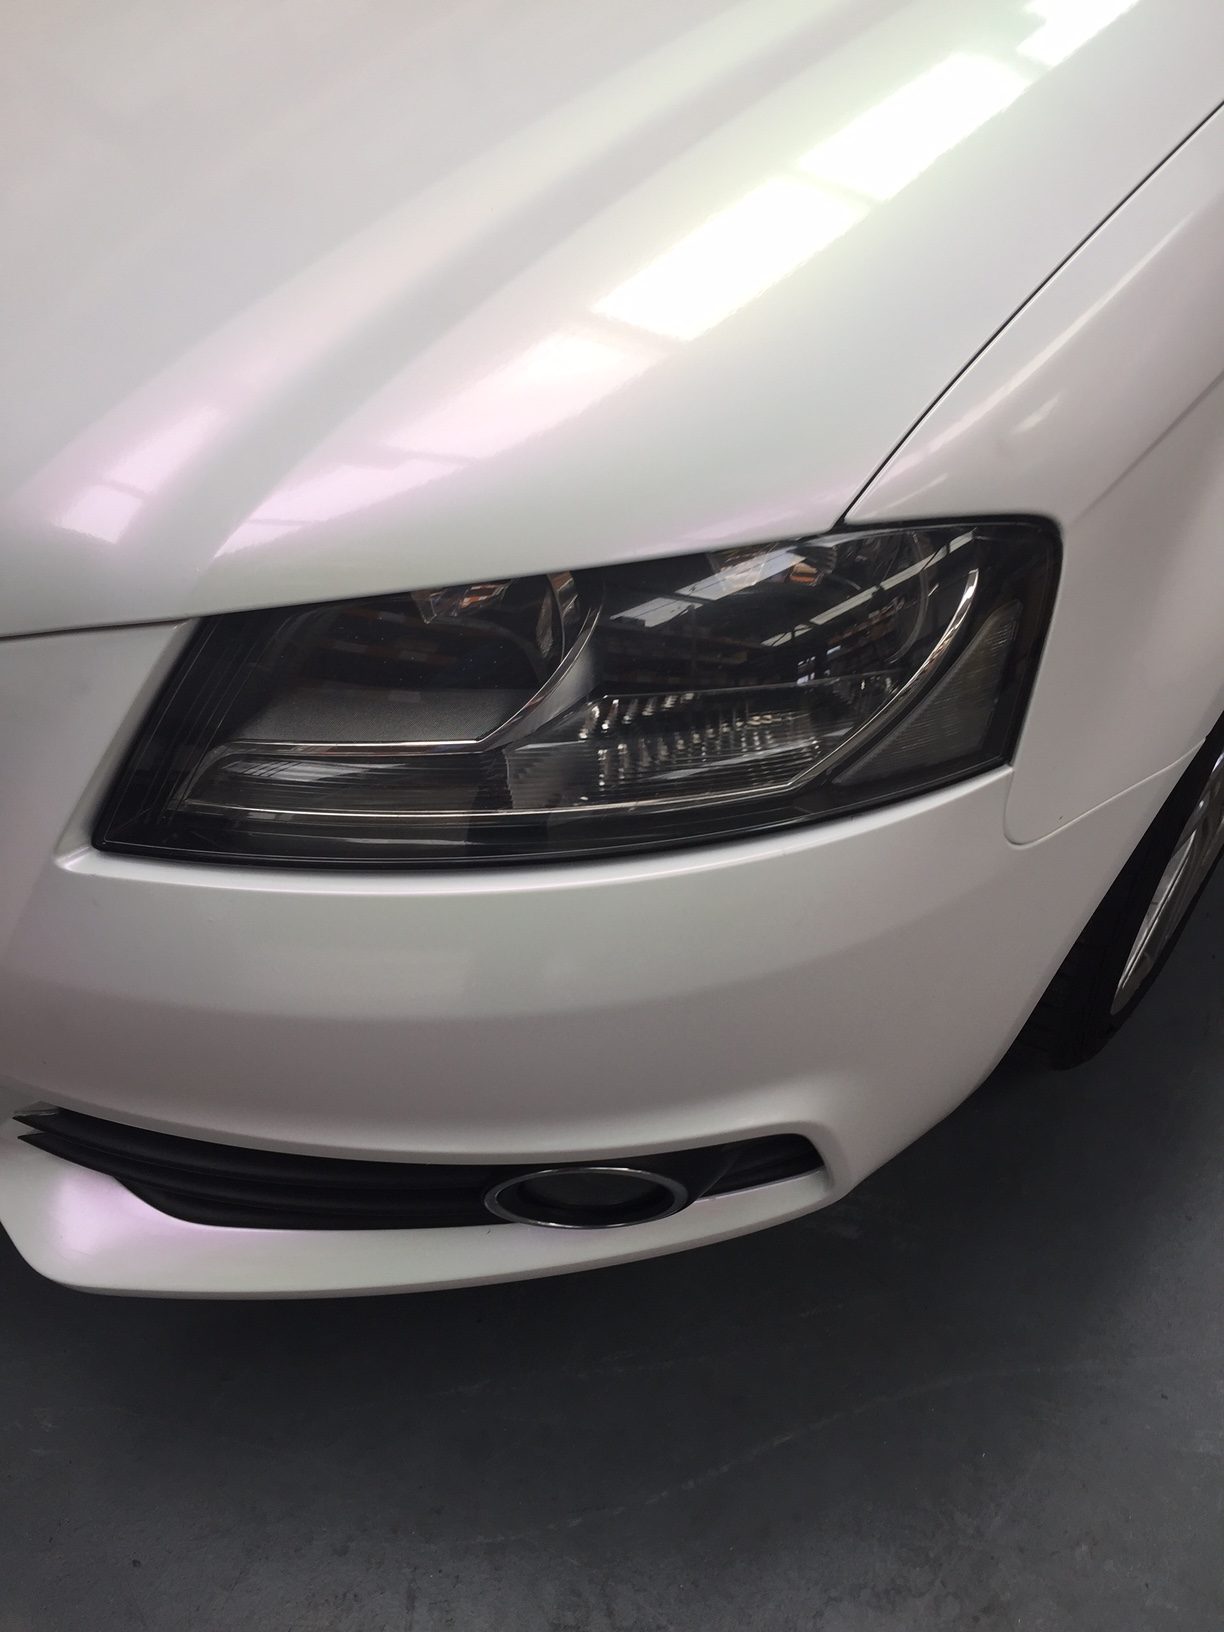 Vandalised Audi A3: Facelift